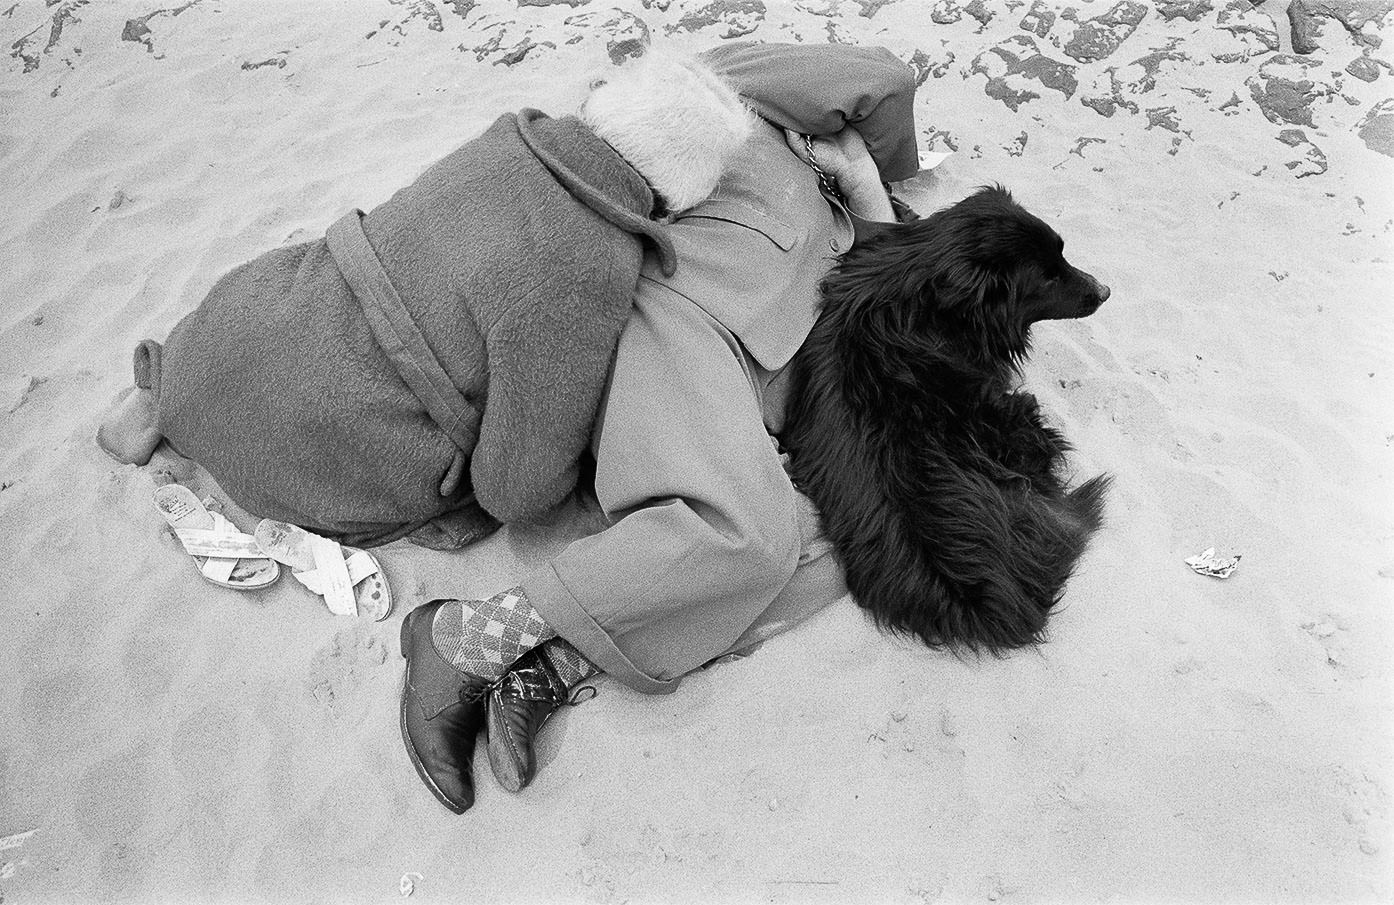 Henri Cartier-Bresson with Martin Parr: Reconciliation